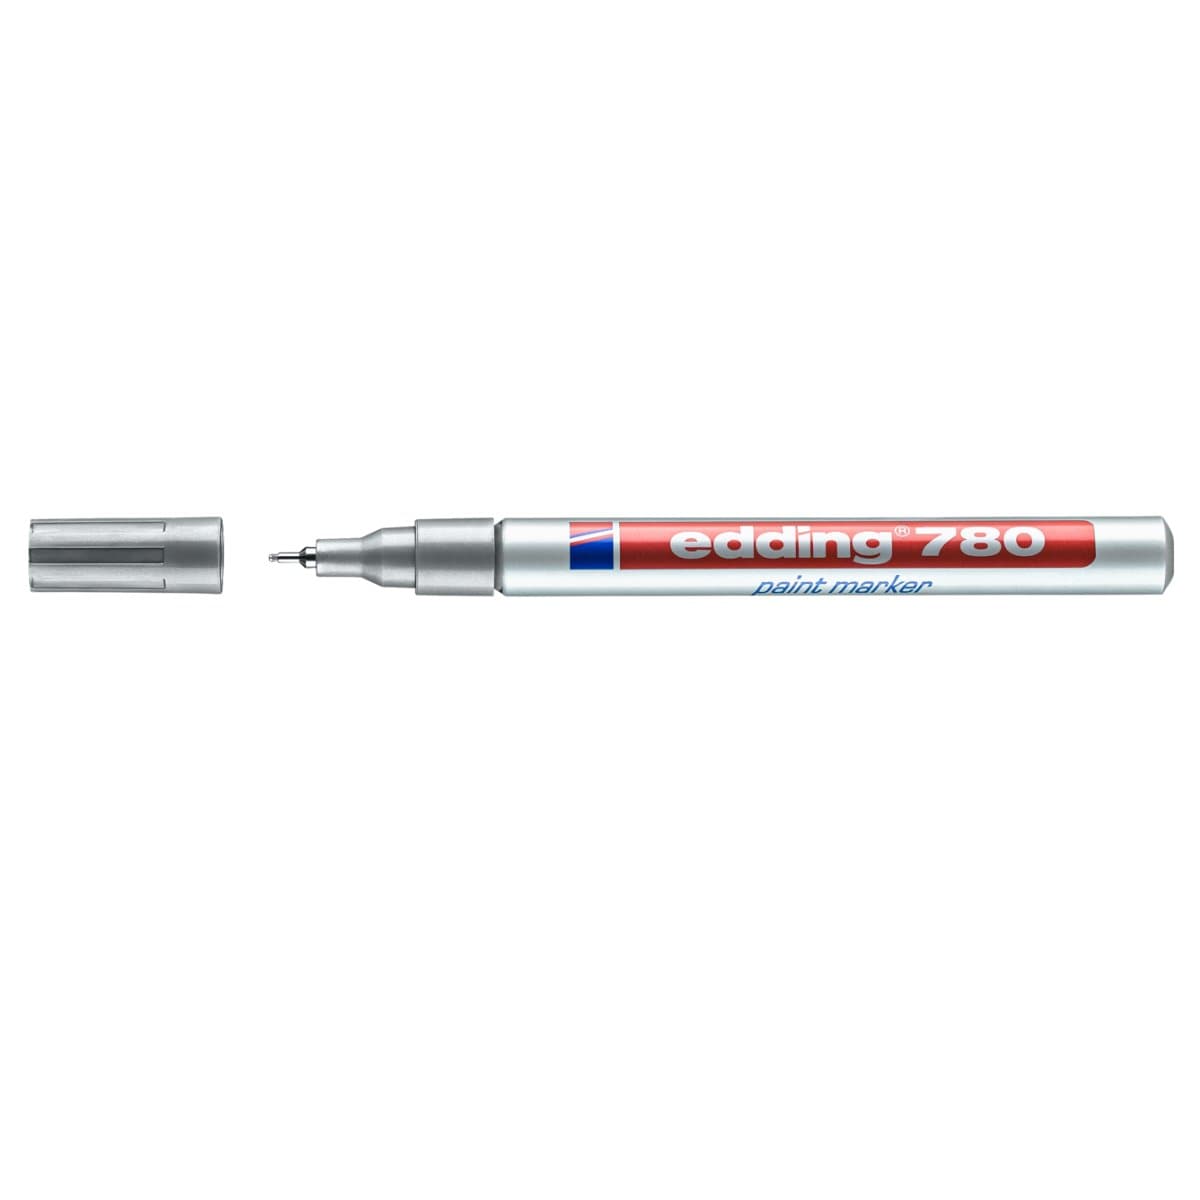 edding 780 Paint Marker, 0.8mm Bullet Tip, Silver - Office Office One LLC